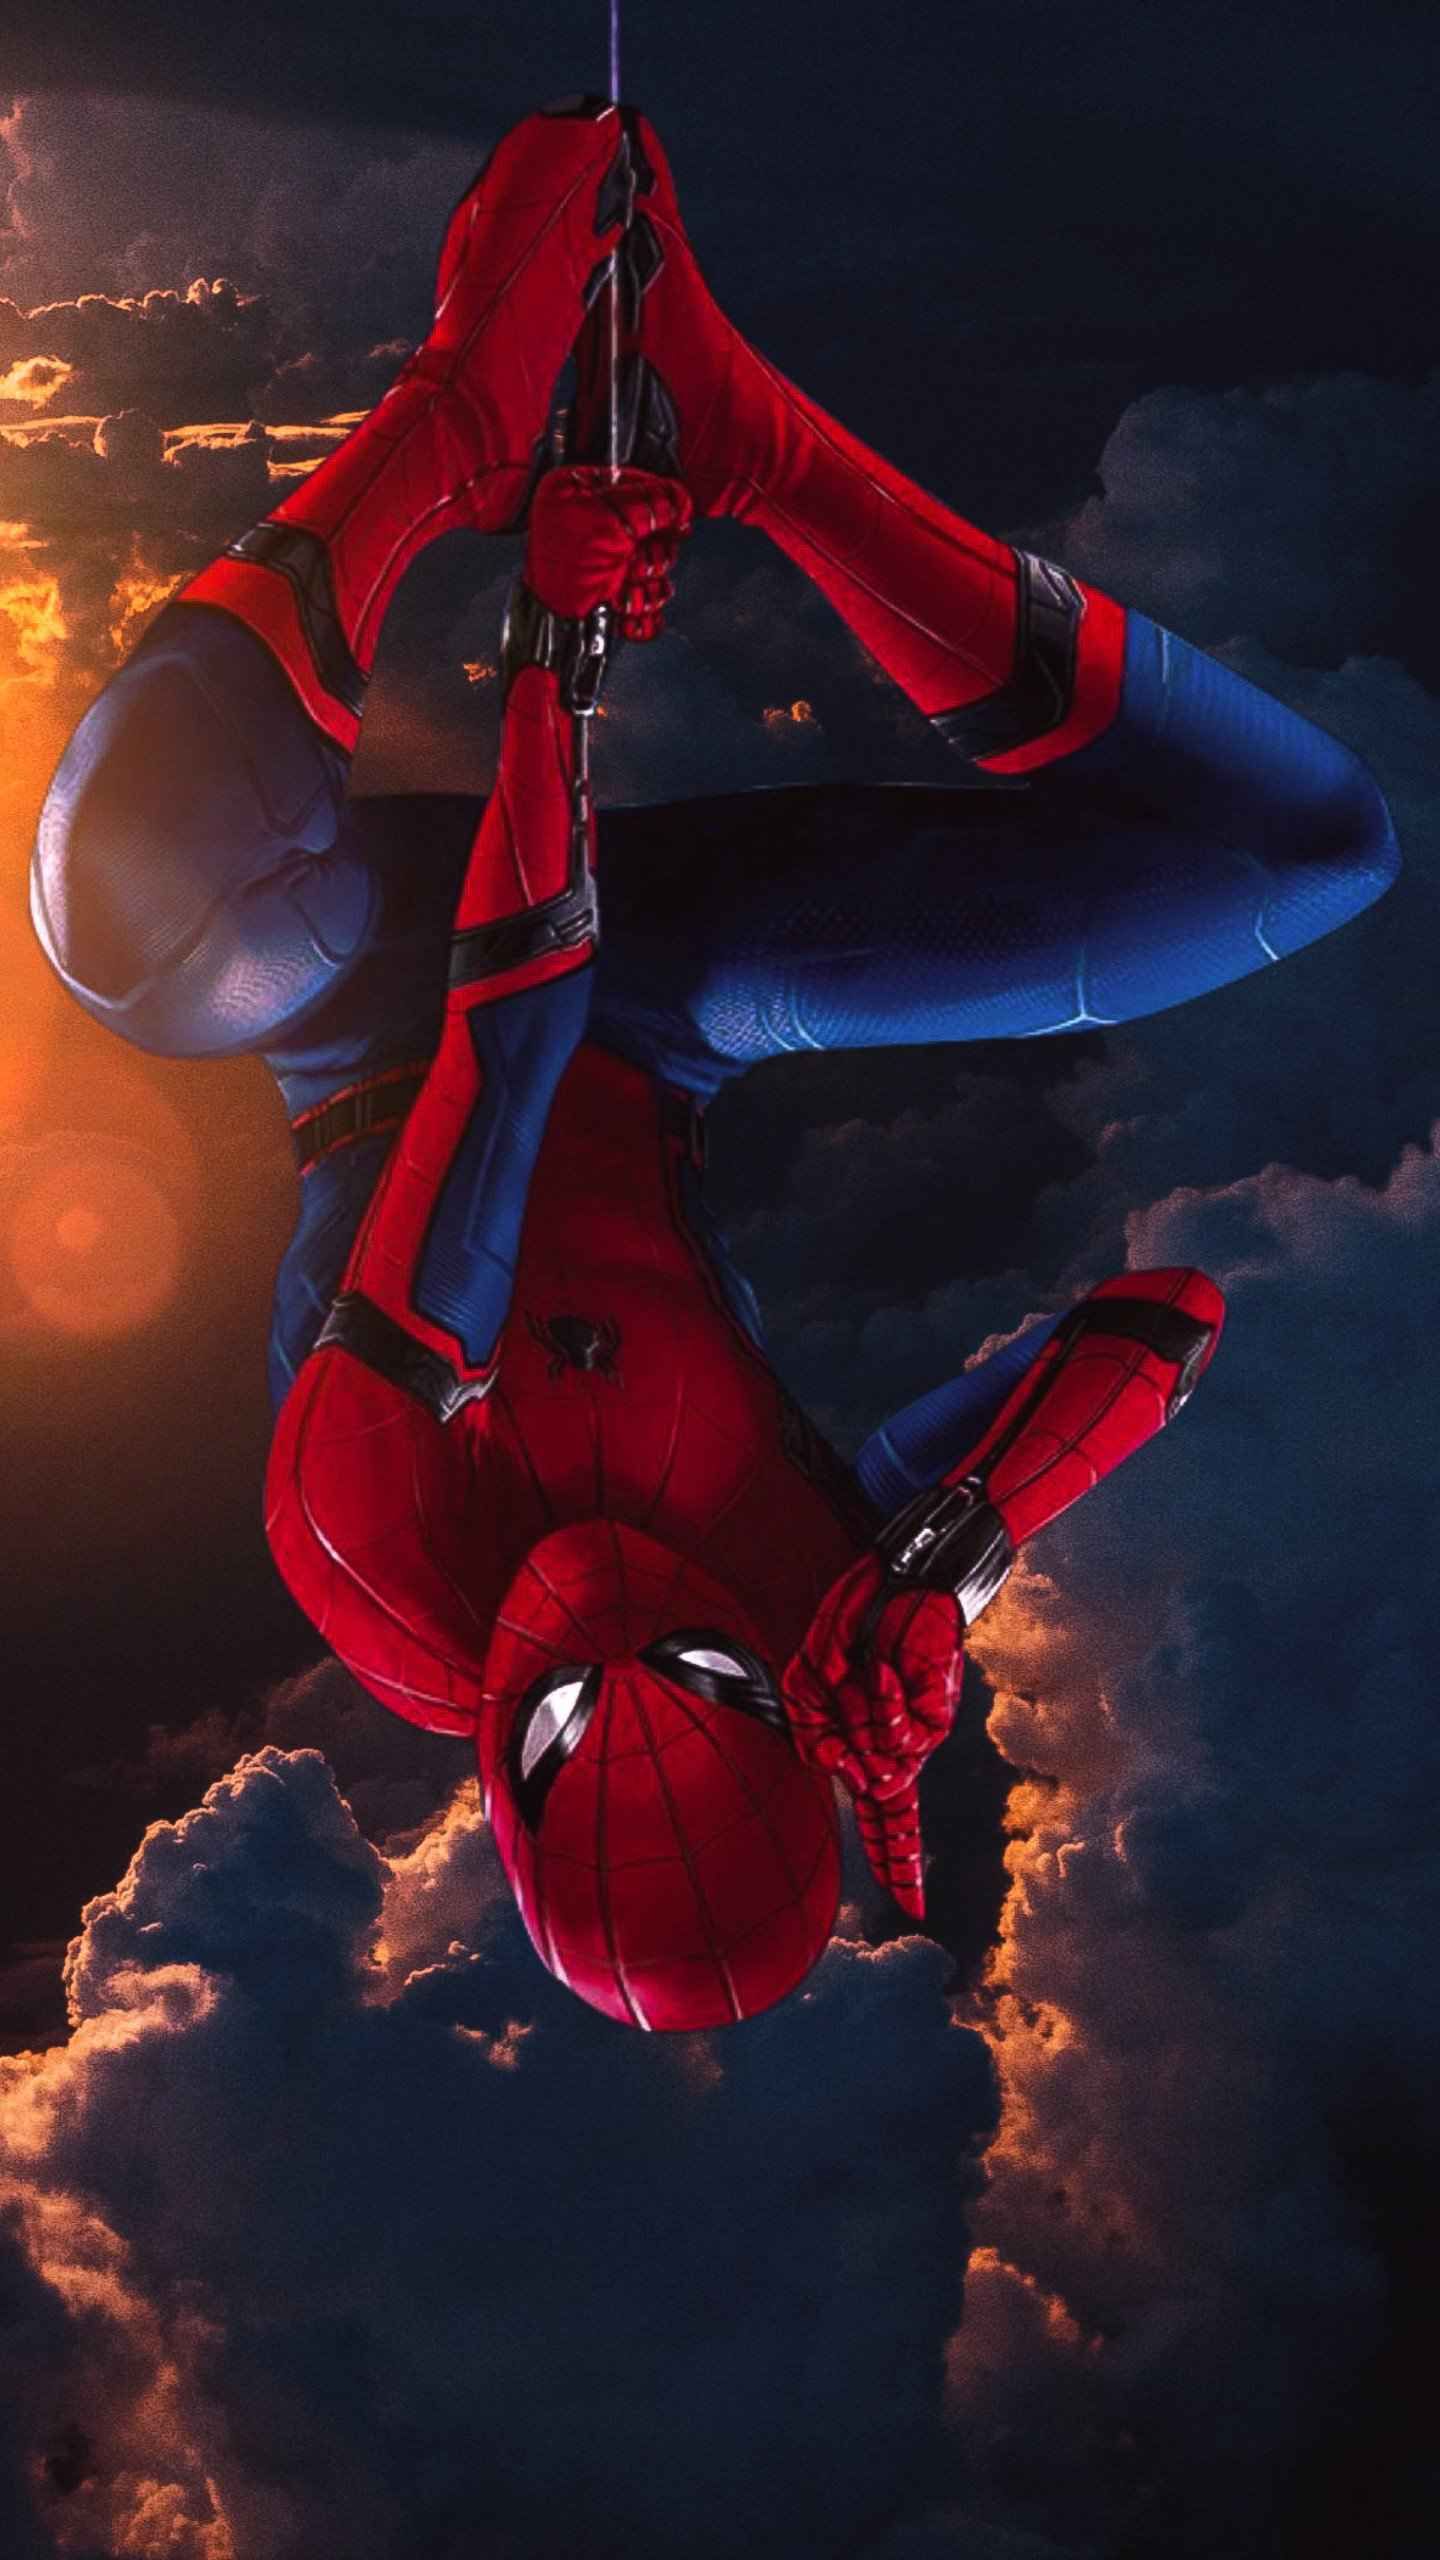 Spider Man Vertical IPhone Wallpaper. Spiderman, Spiderman picture, Marvel superhero posters